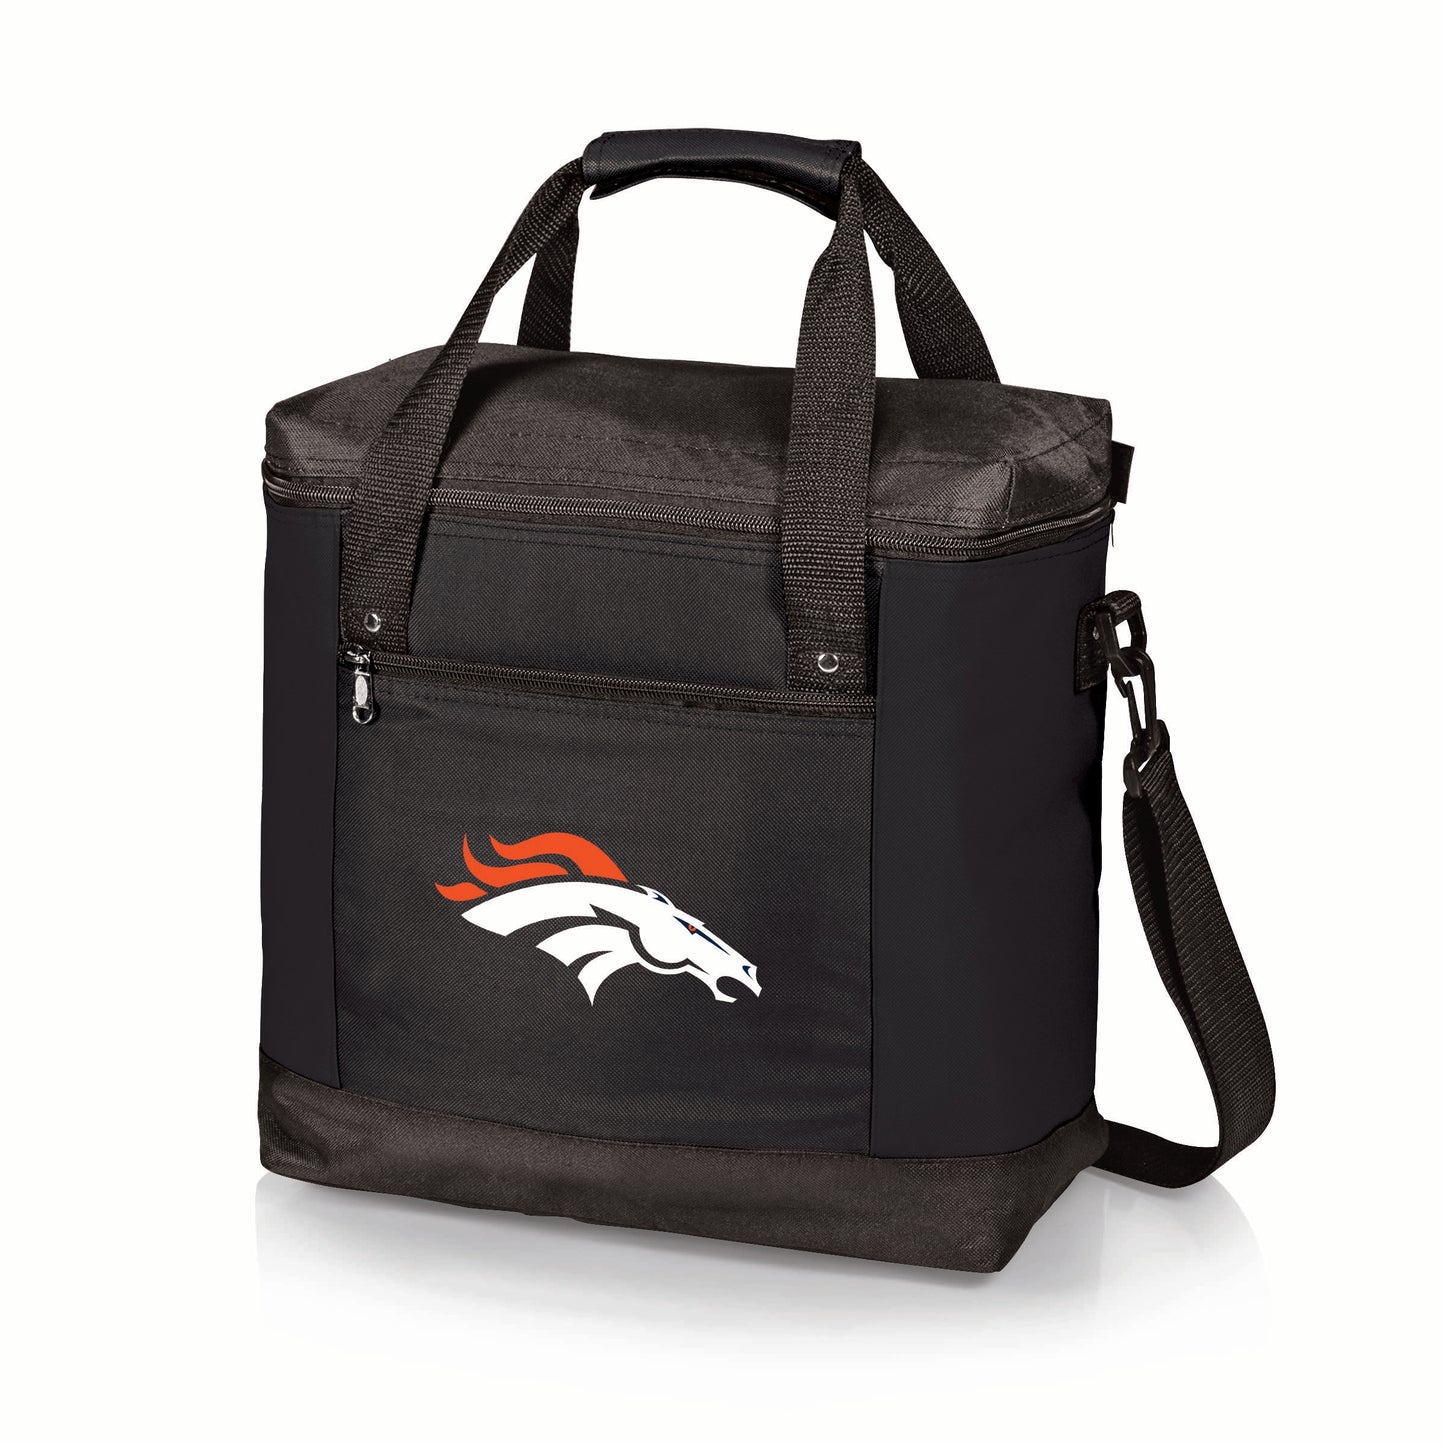 Denver Broncos - Montero Cooler Tote Bag